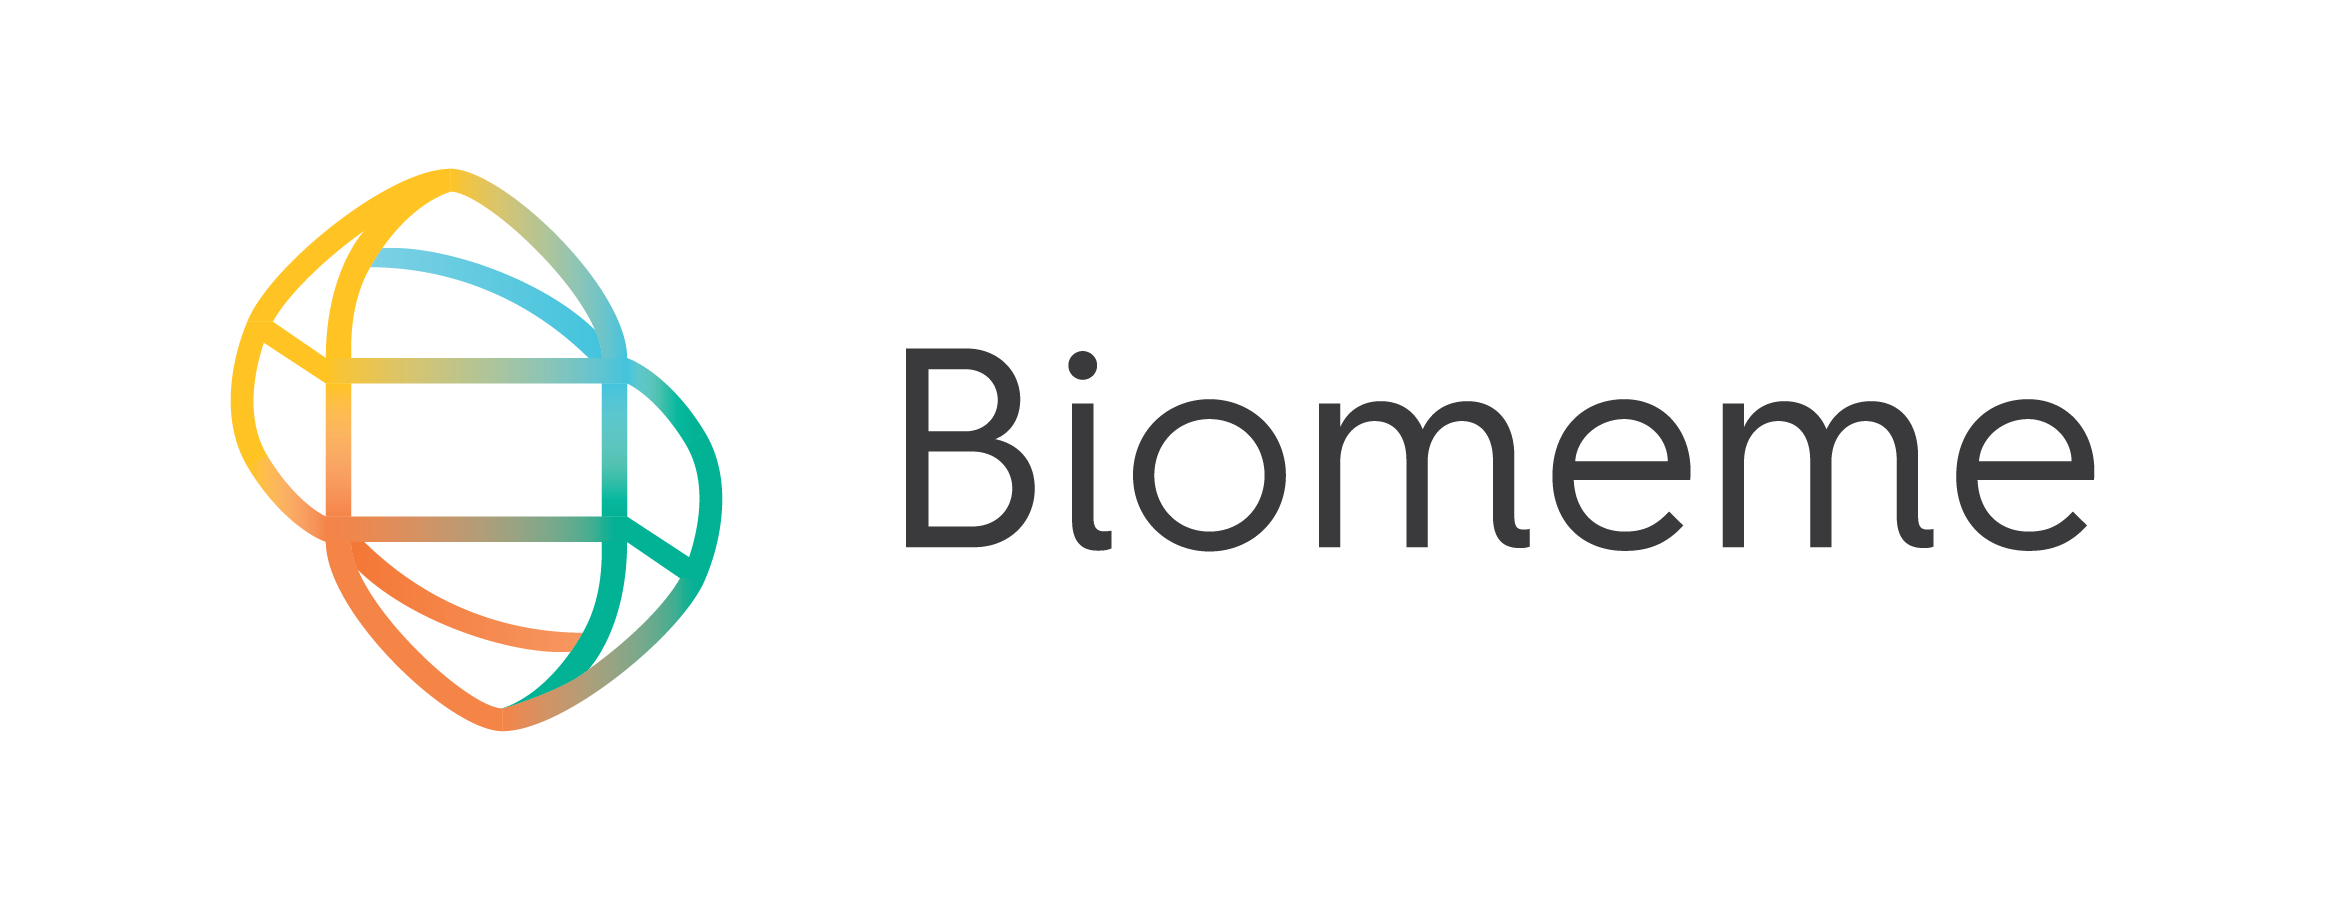 Biomeme, Inc.